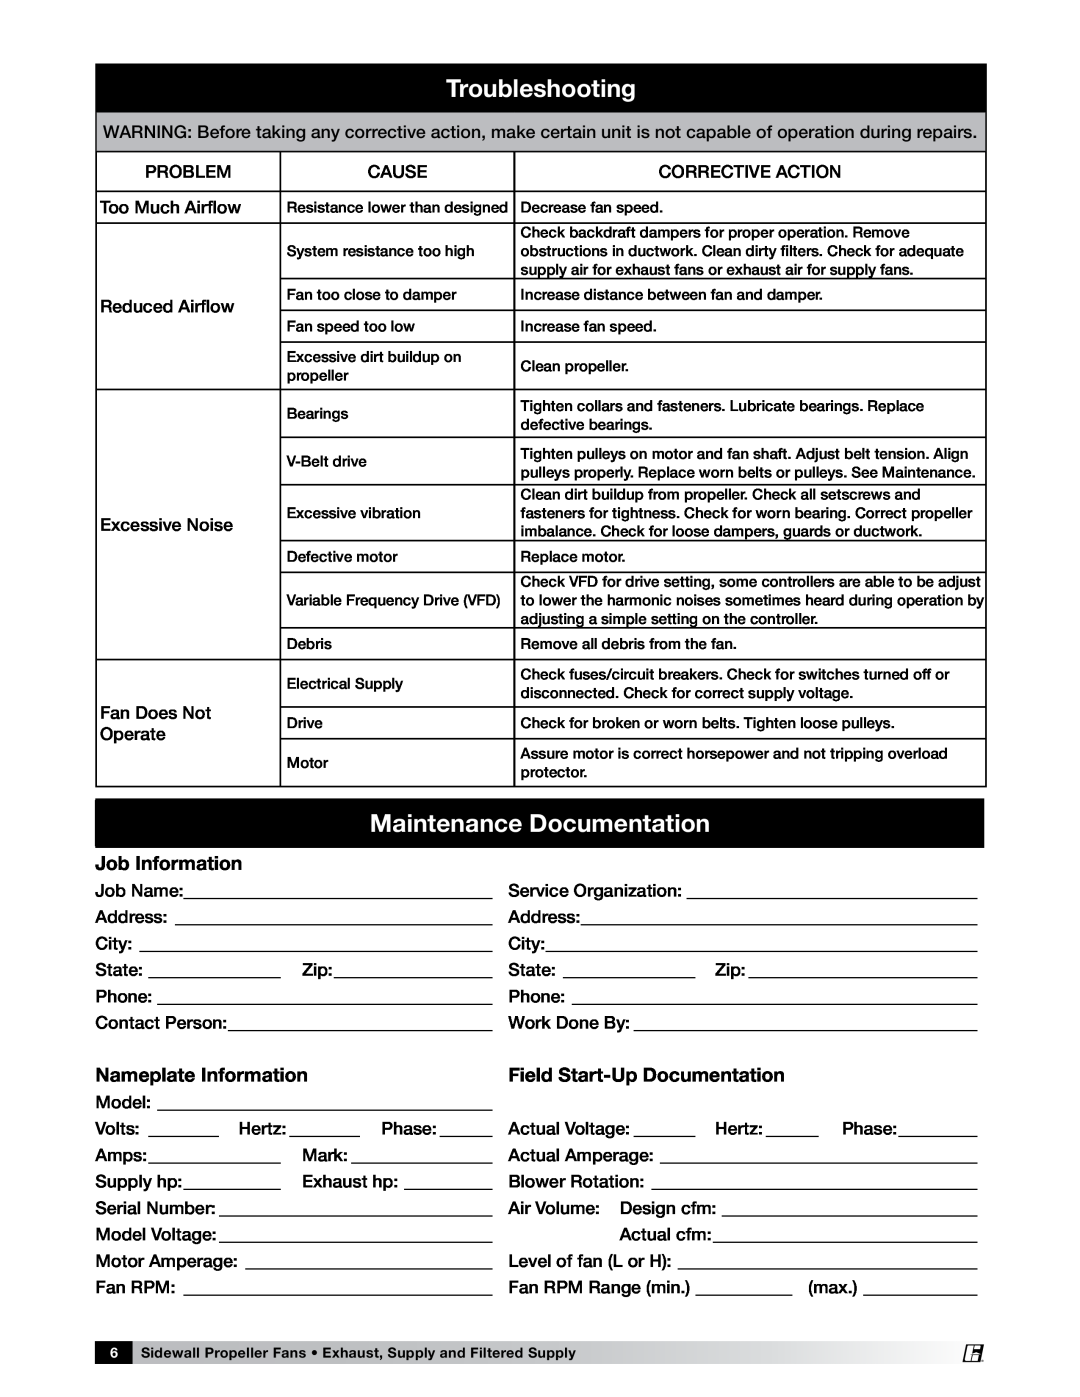 Greenheck Fan PN 471755 manual Troubleshooting, Maintenance Documentation, Job Information, Nameplate Information 